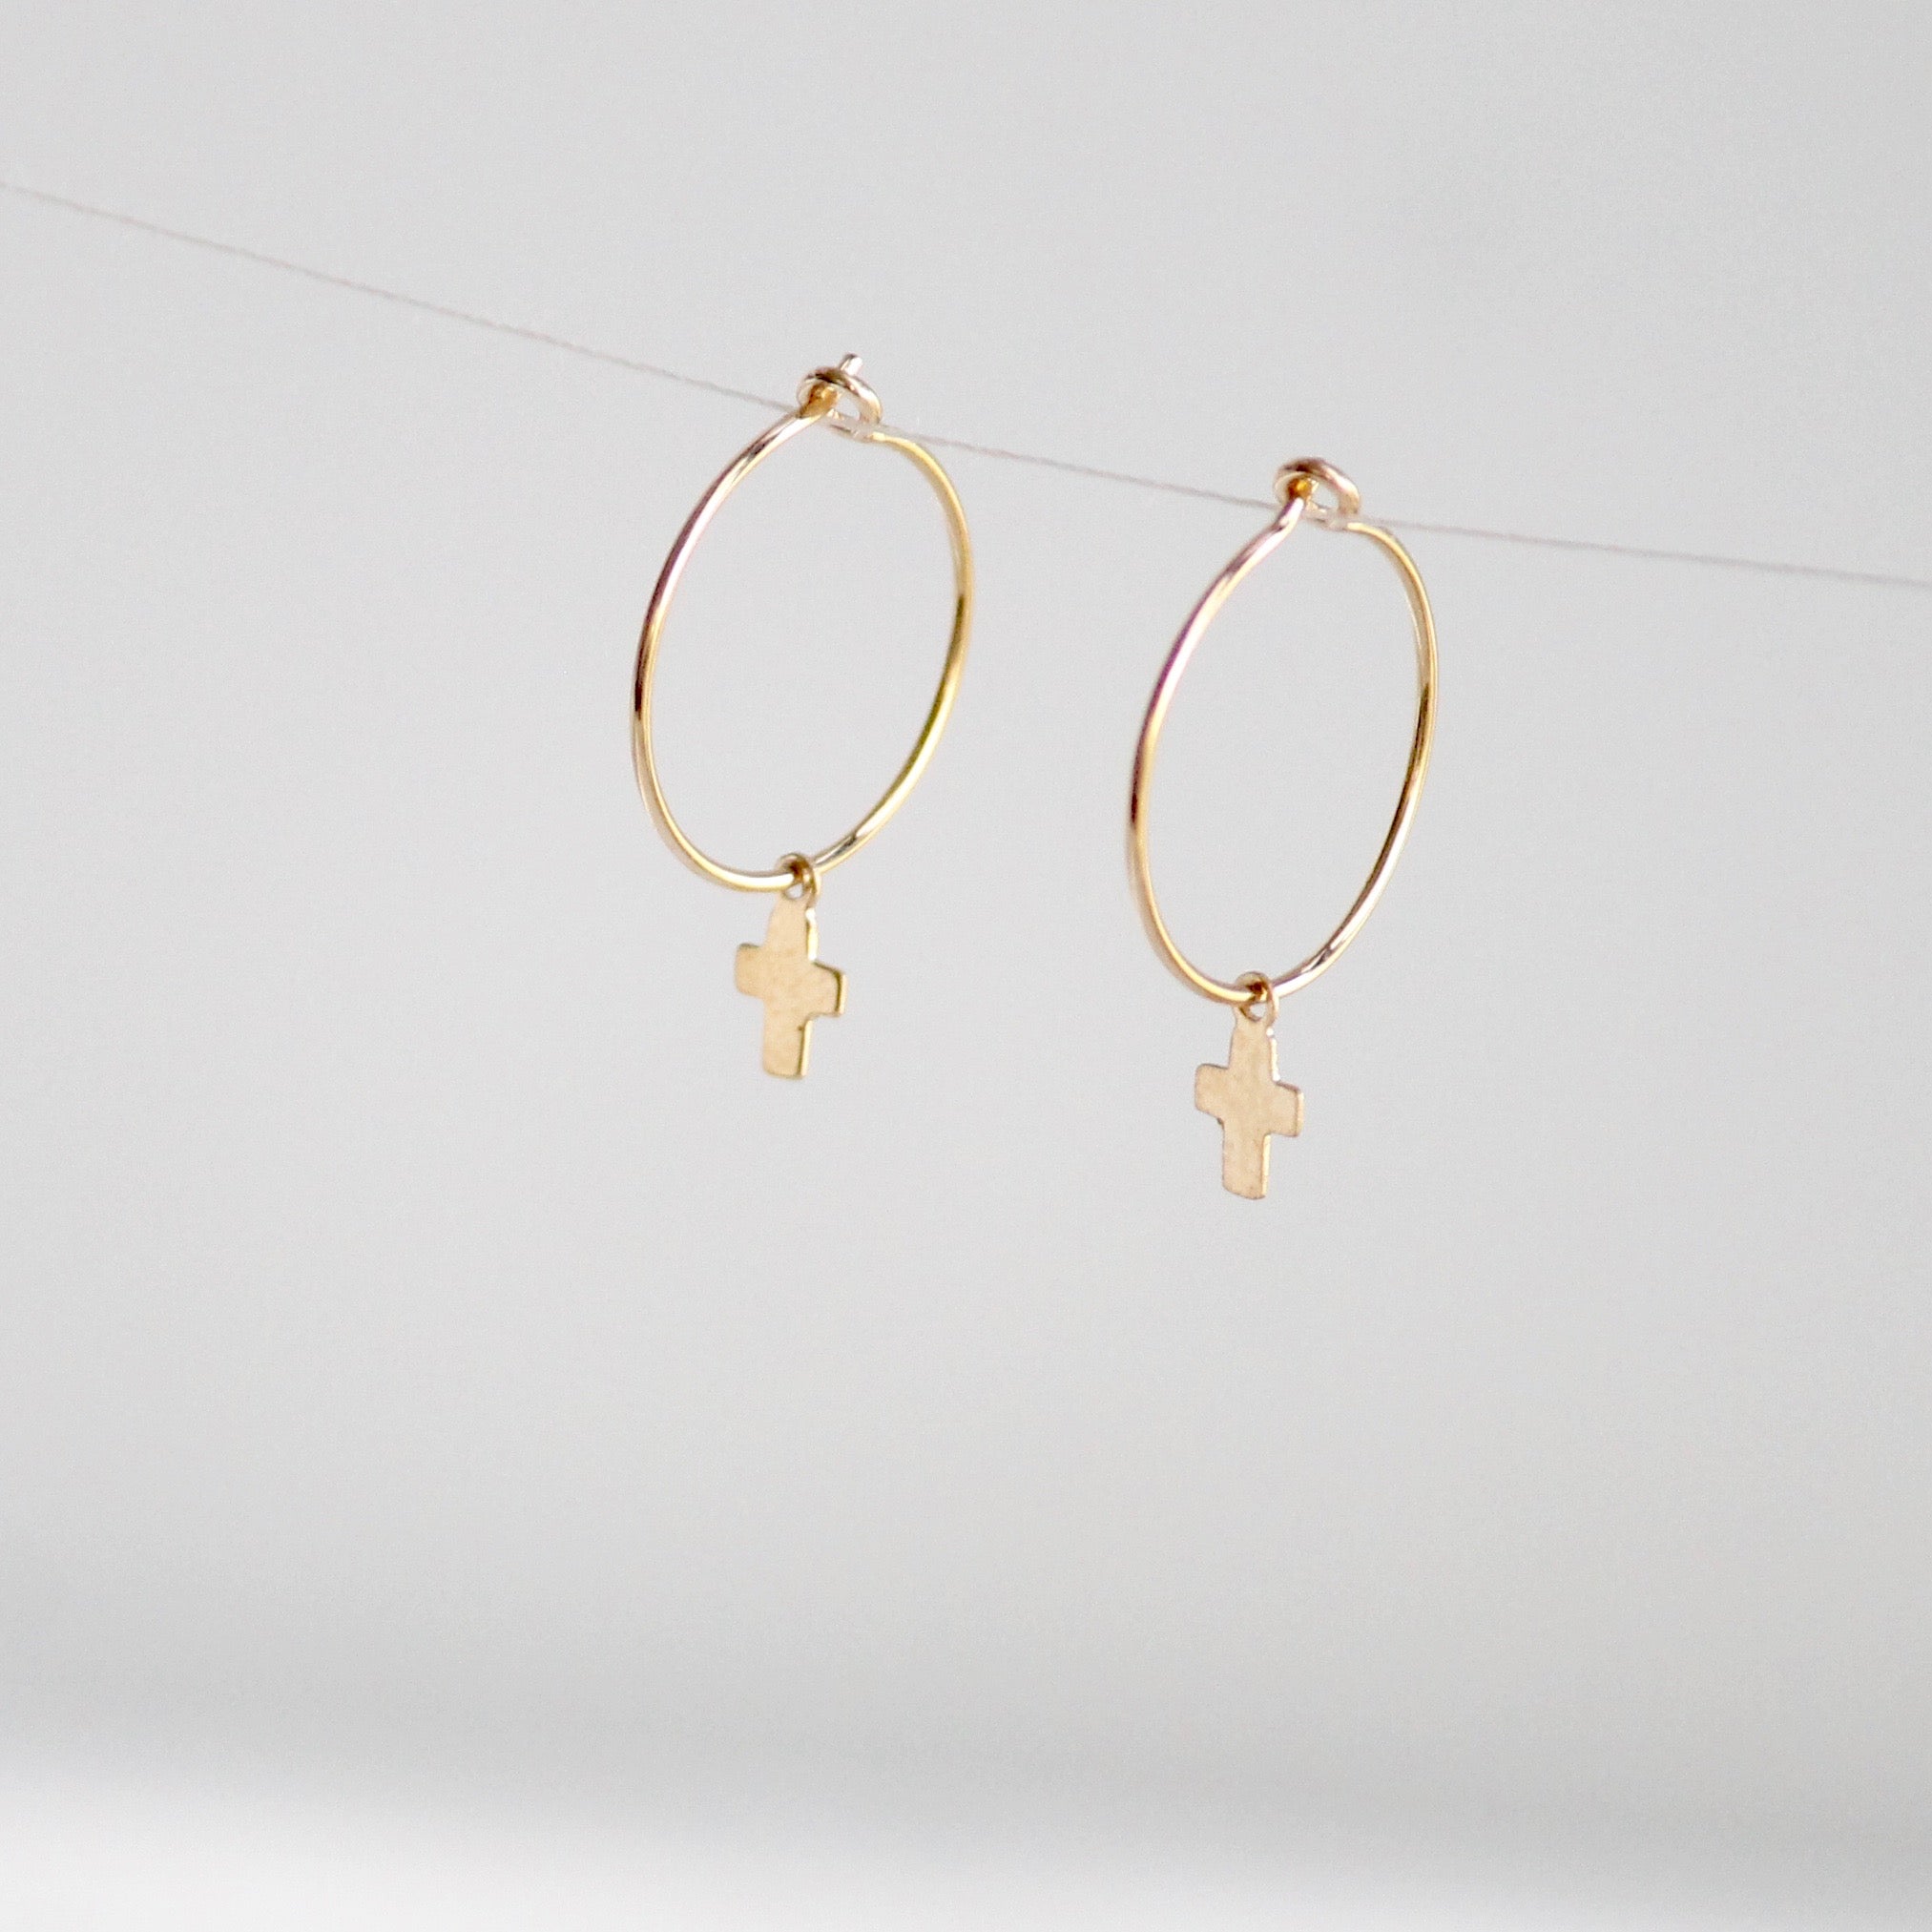 Details more than 225 hoop cross earrings gold super hot